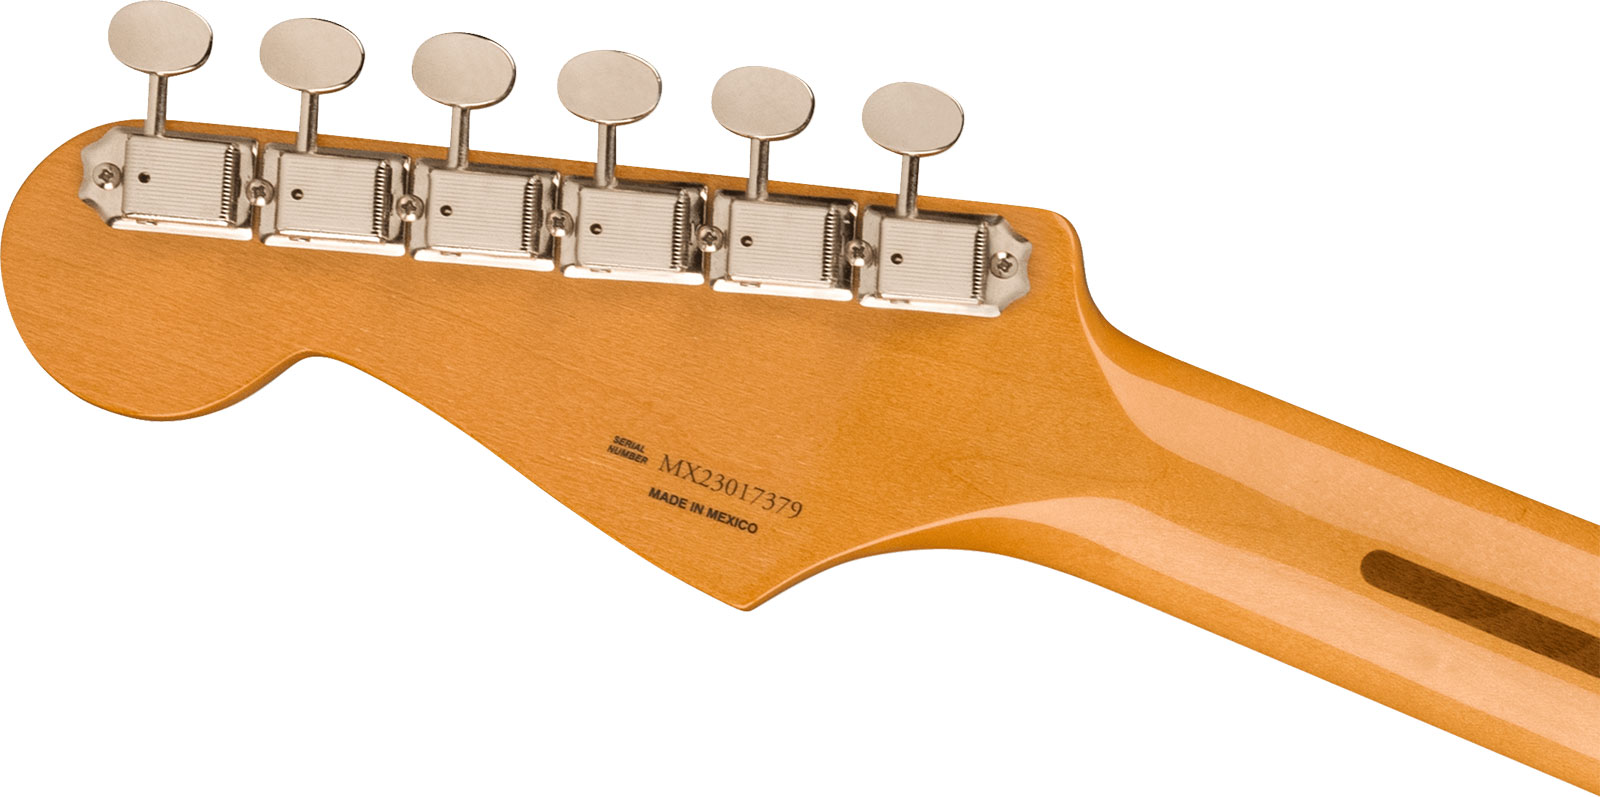 Fender Strat 50s Vintera 2 Mex 3s Trem Mn - Black - Str shape electric guitar - Variation 3